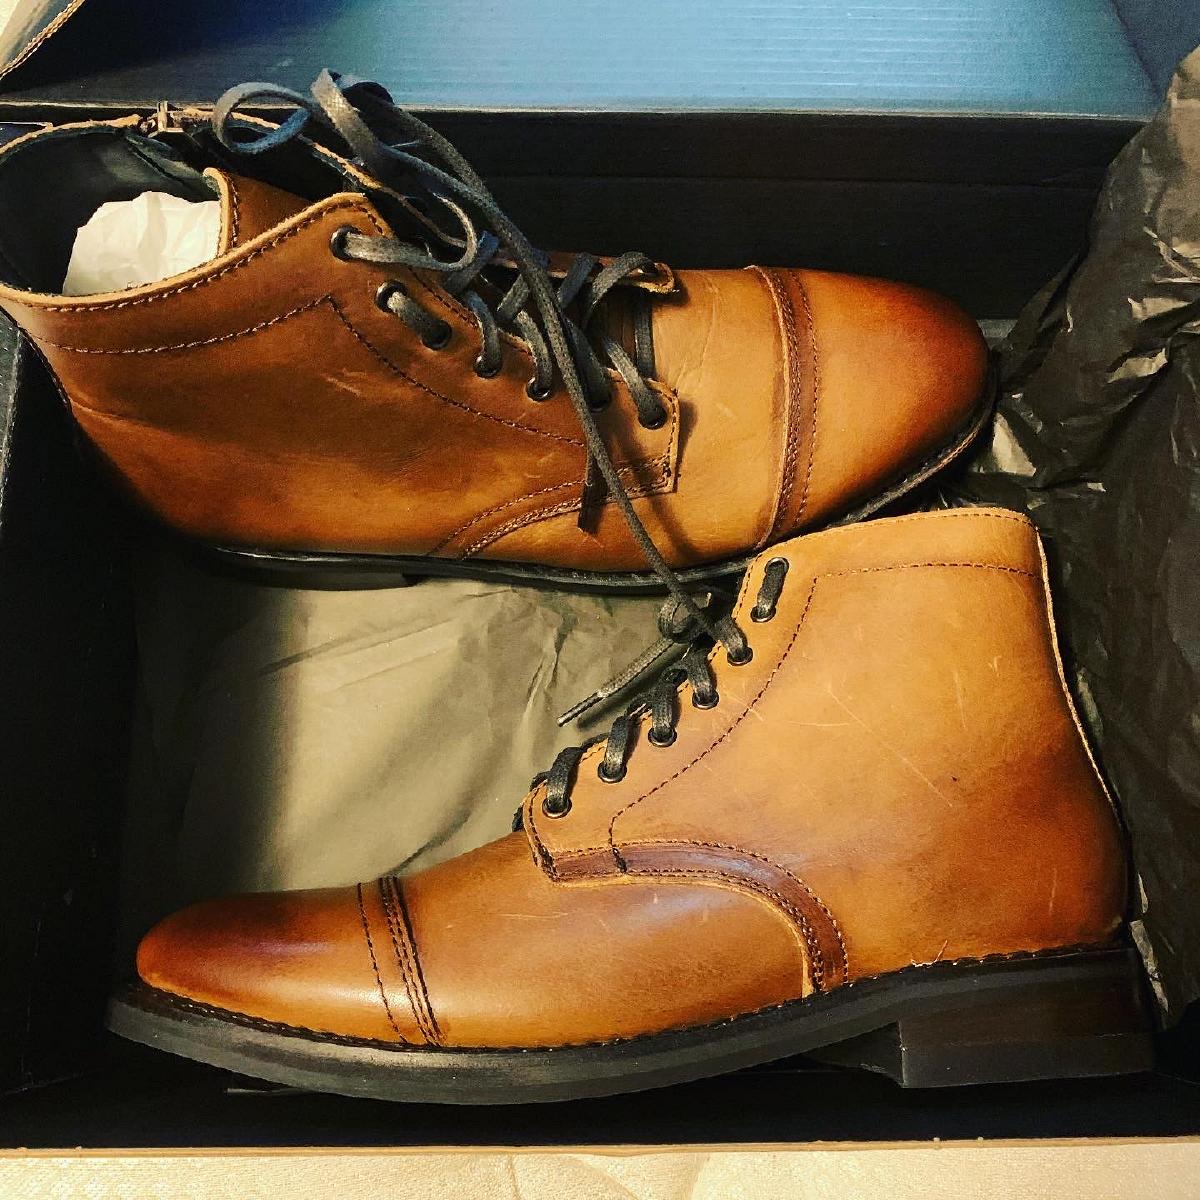 Thursday company men’s boots size 10.0